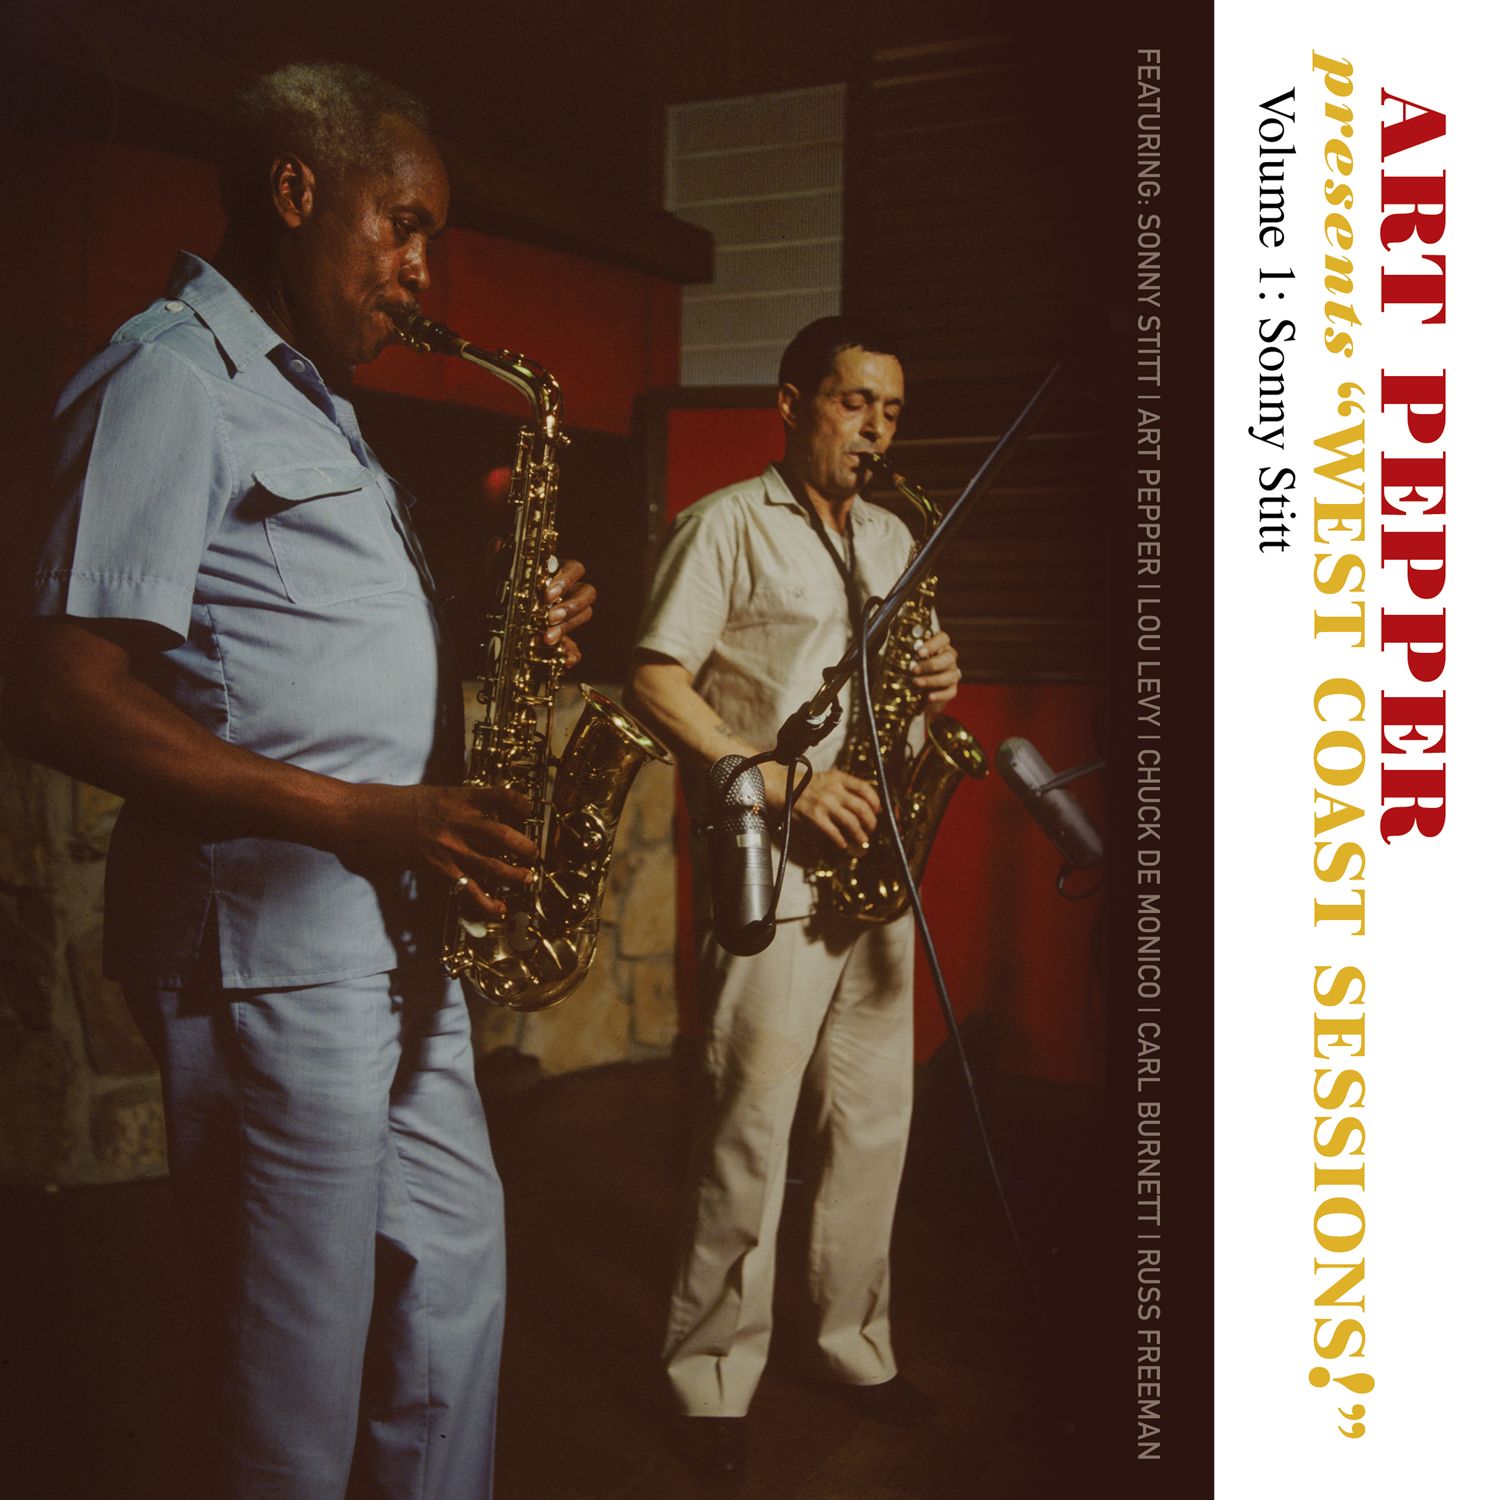 Art Pepper Presents "West Coast Sessions!" Volume 1: Sonny Stitt